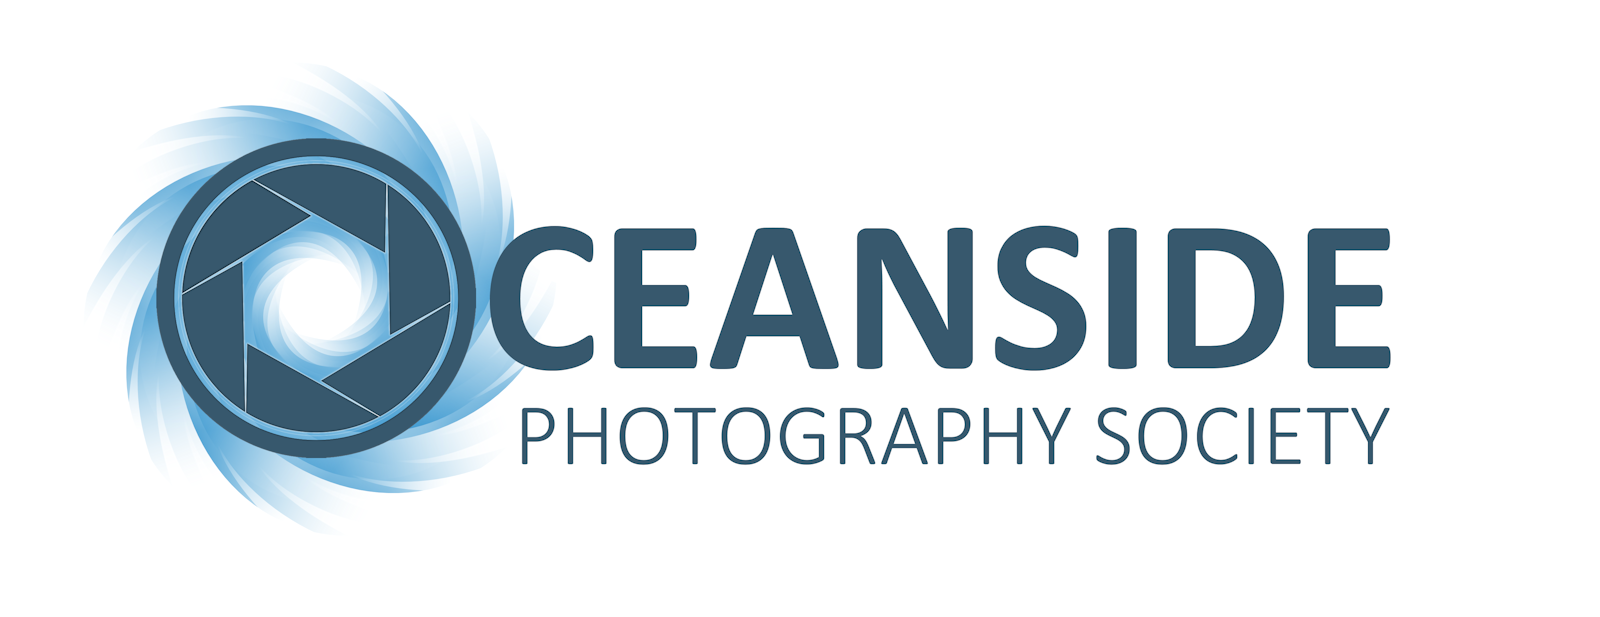 oceanside photographers